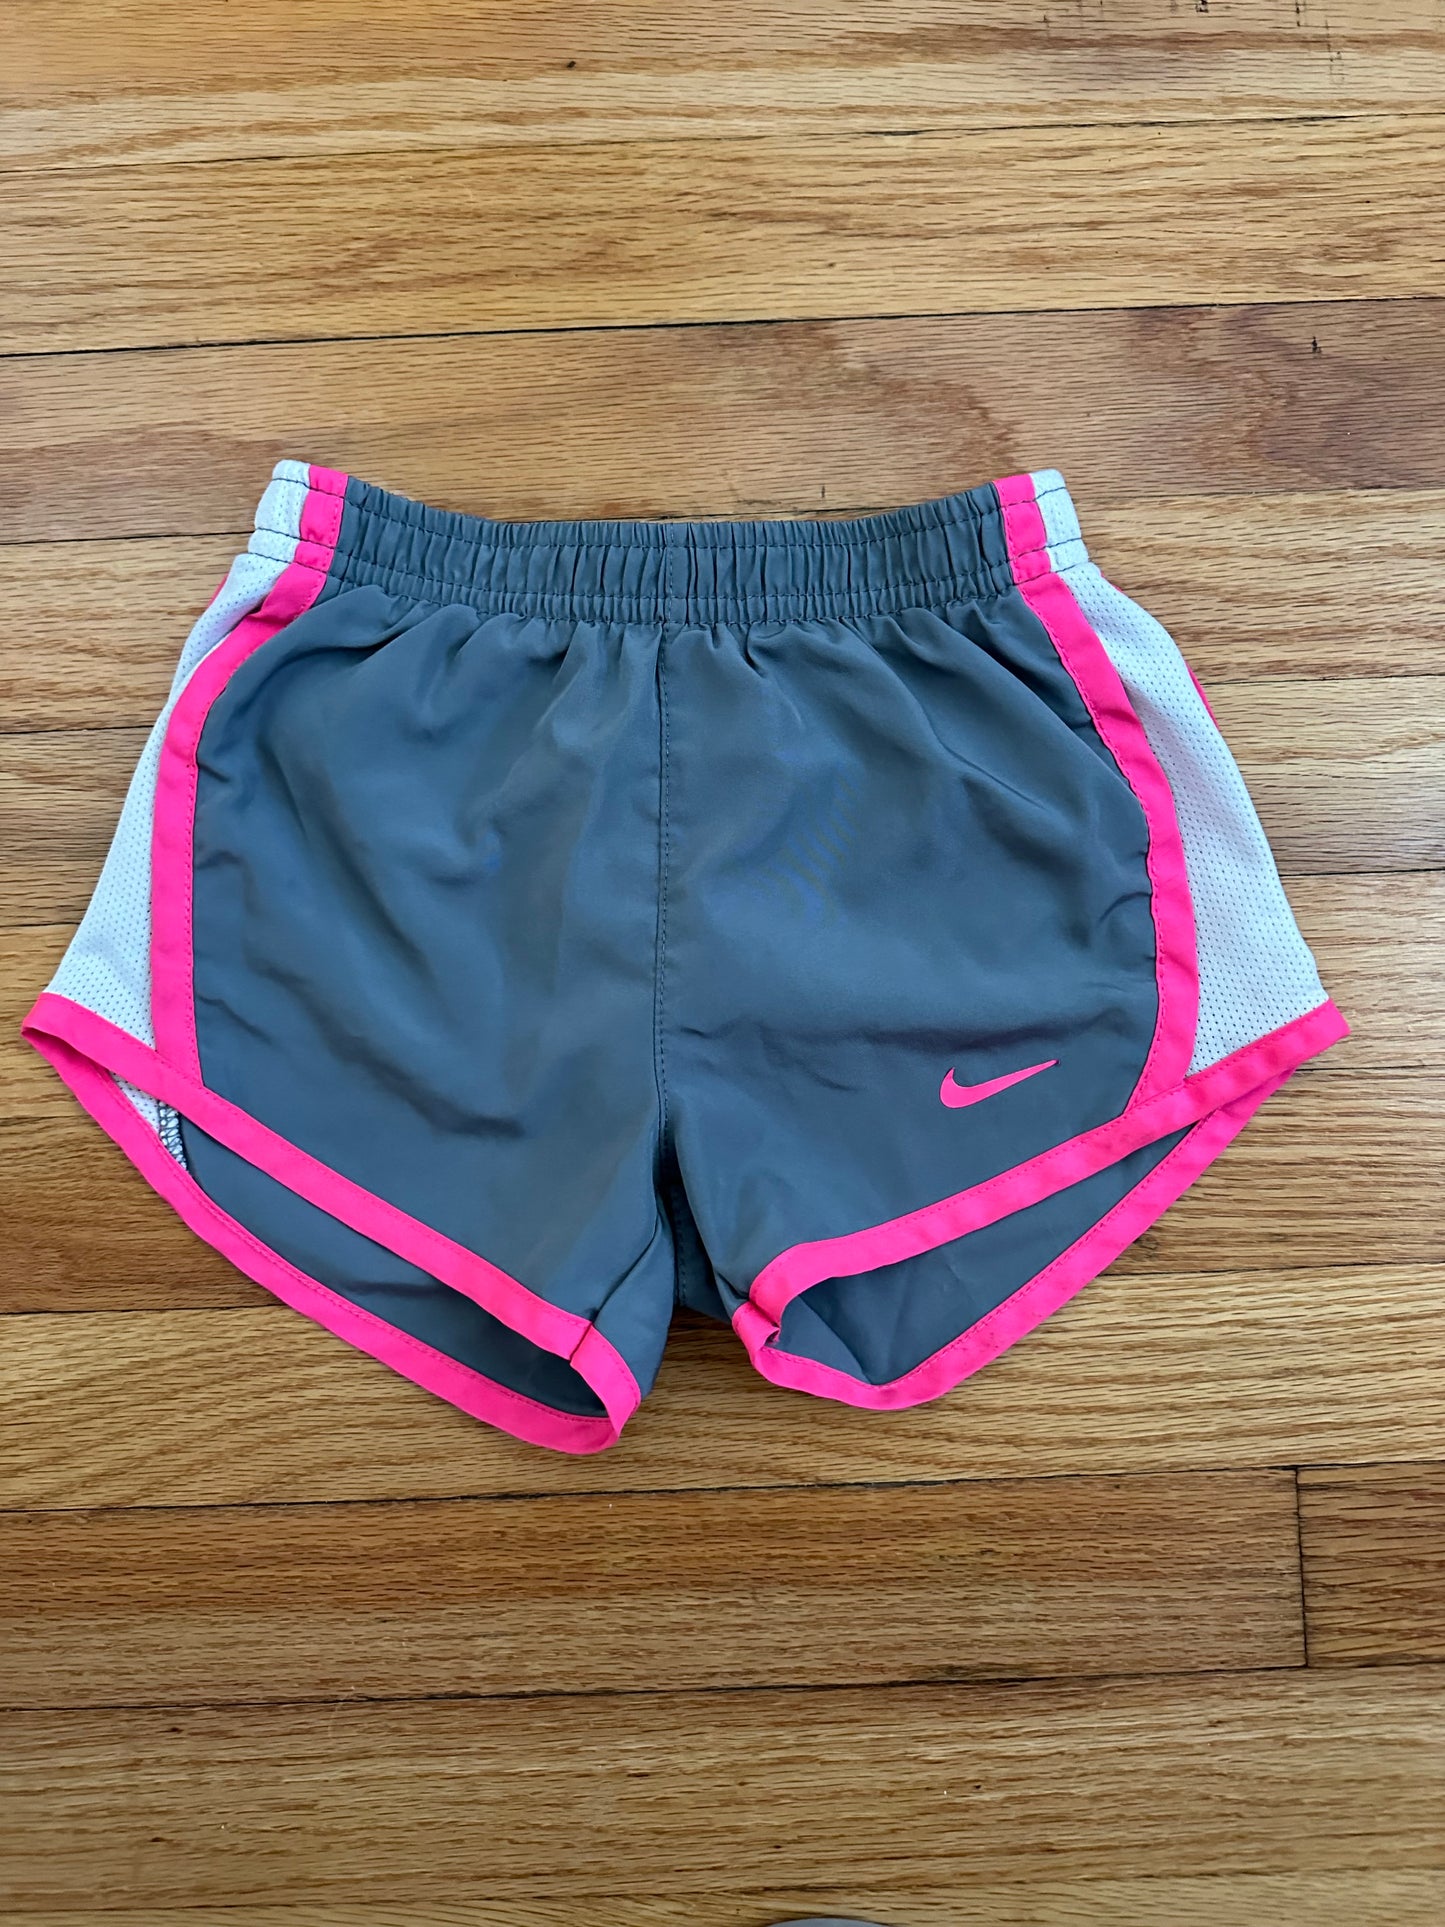 Nike Dri Fit Shorts, Gray / Pink, Girls 3T